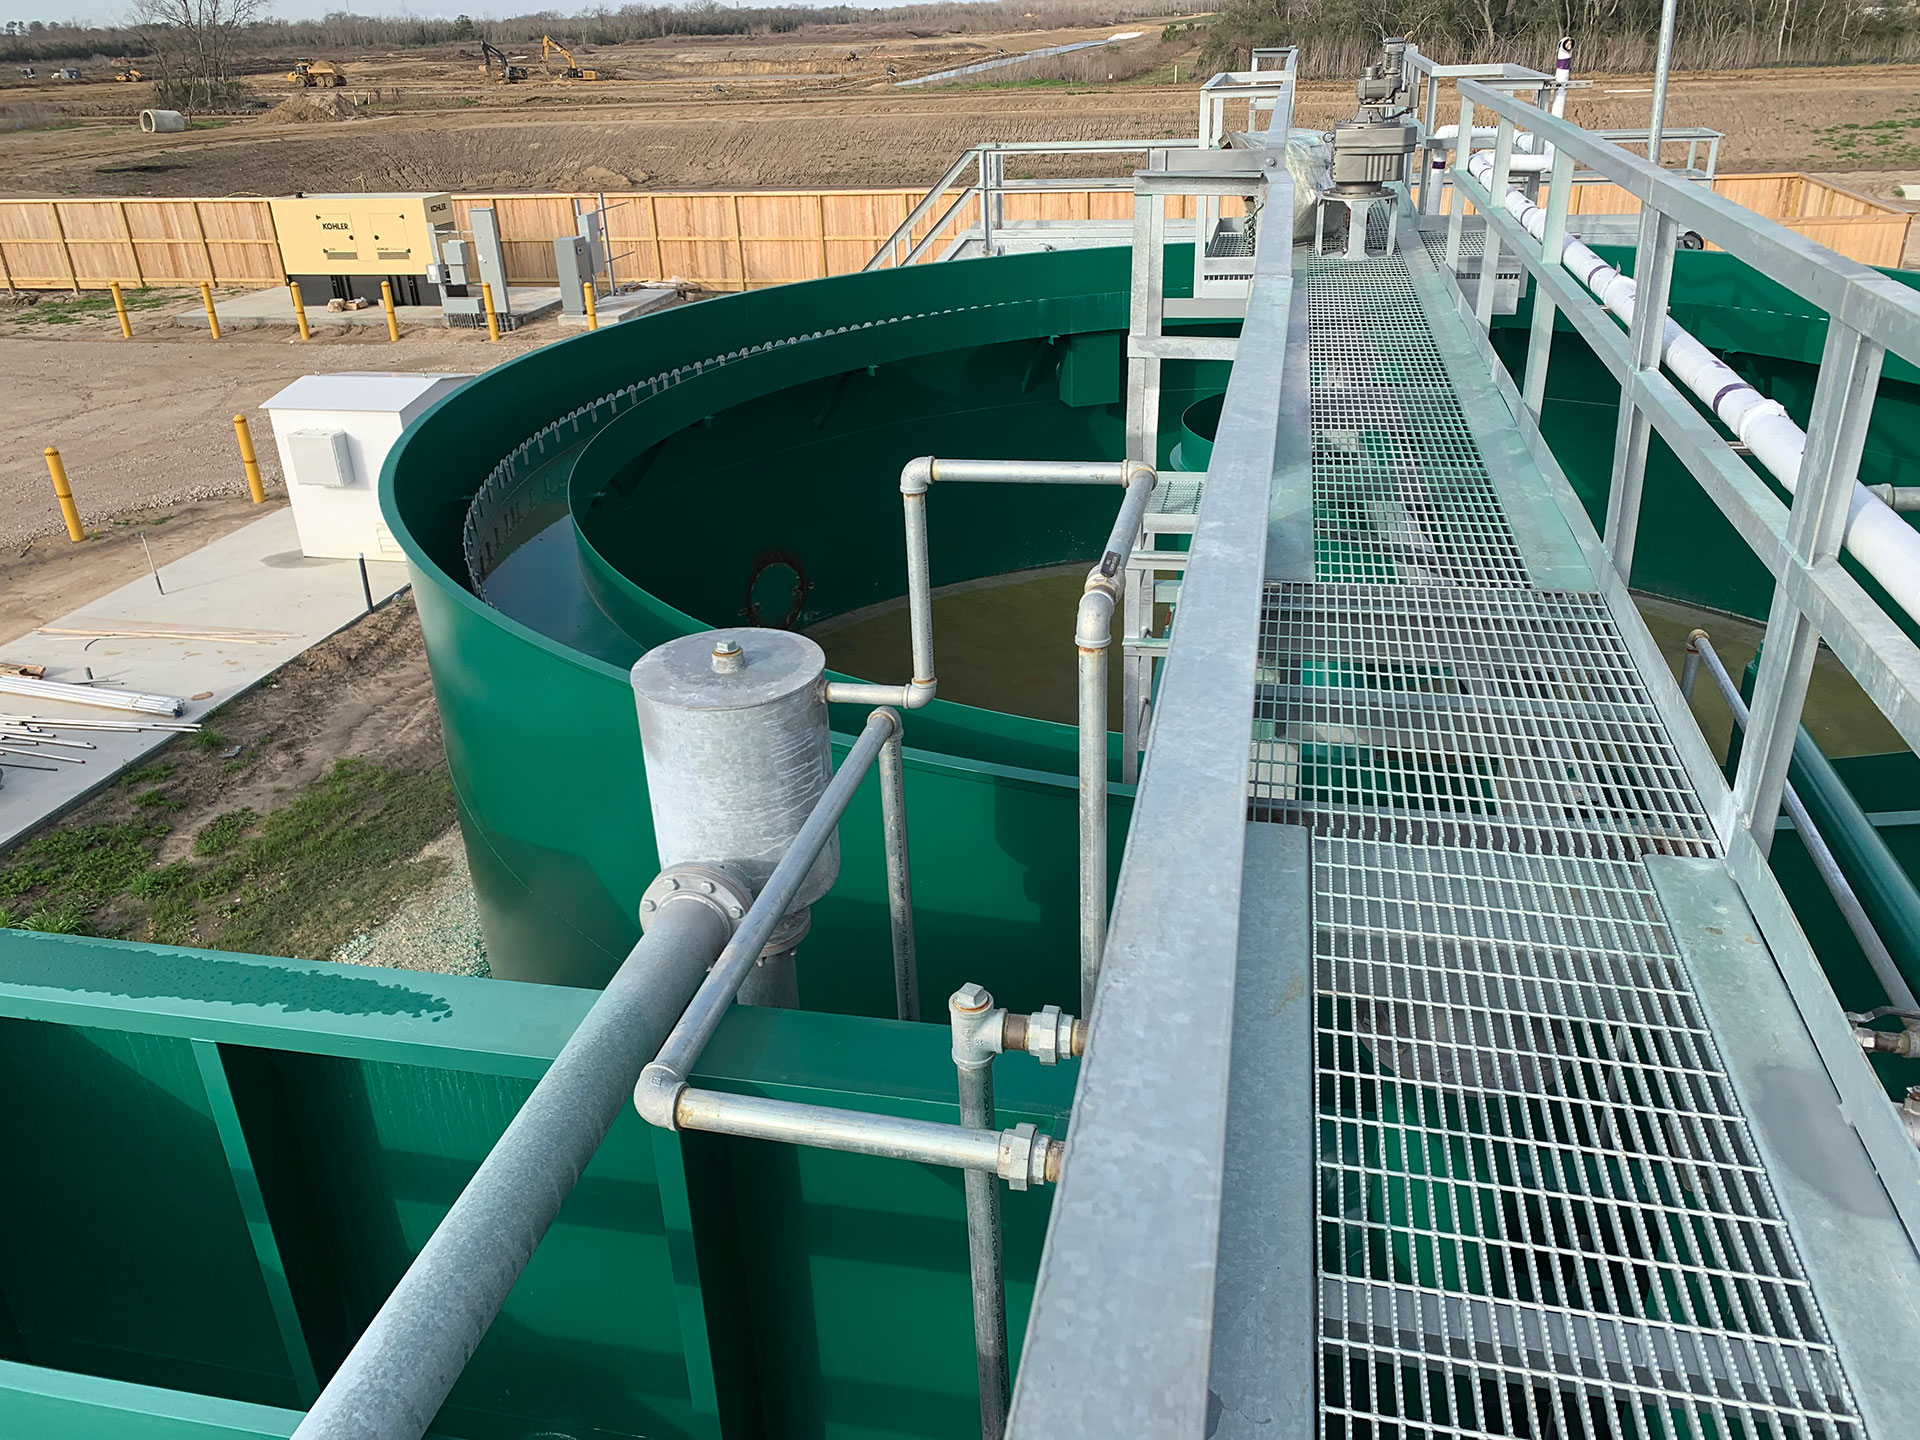 Lago Bello Wastewater Treatment Plant